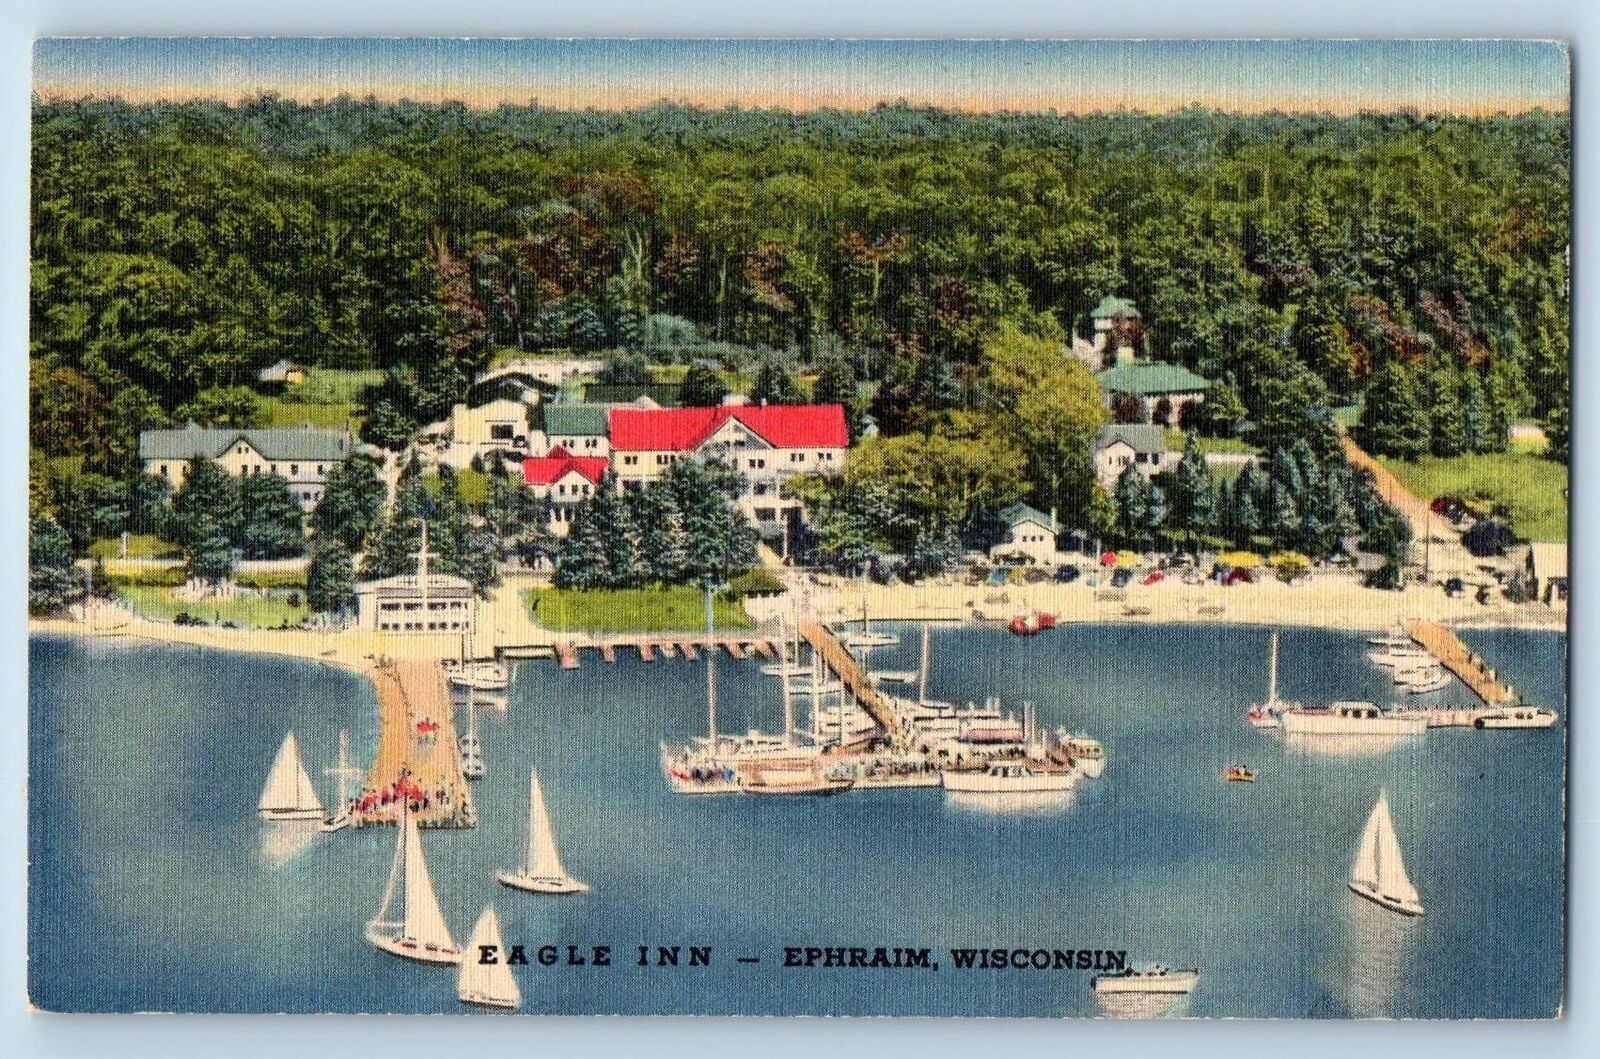 Ephraim Wisconsin WI Postcard Bird's Eye View Of Eagle Inn c1940s Vintage Boats